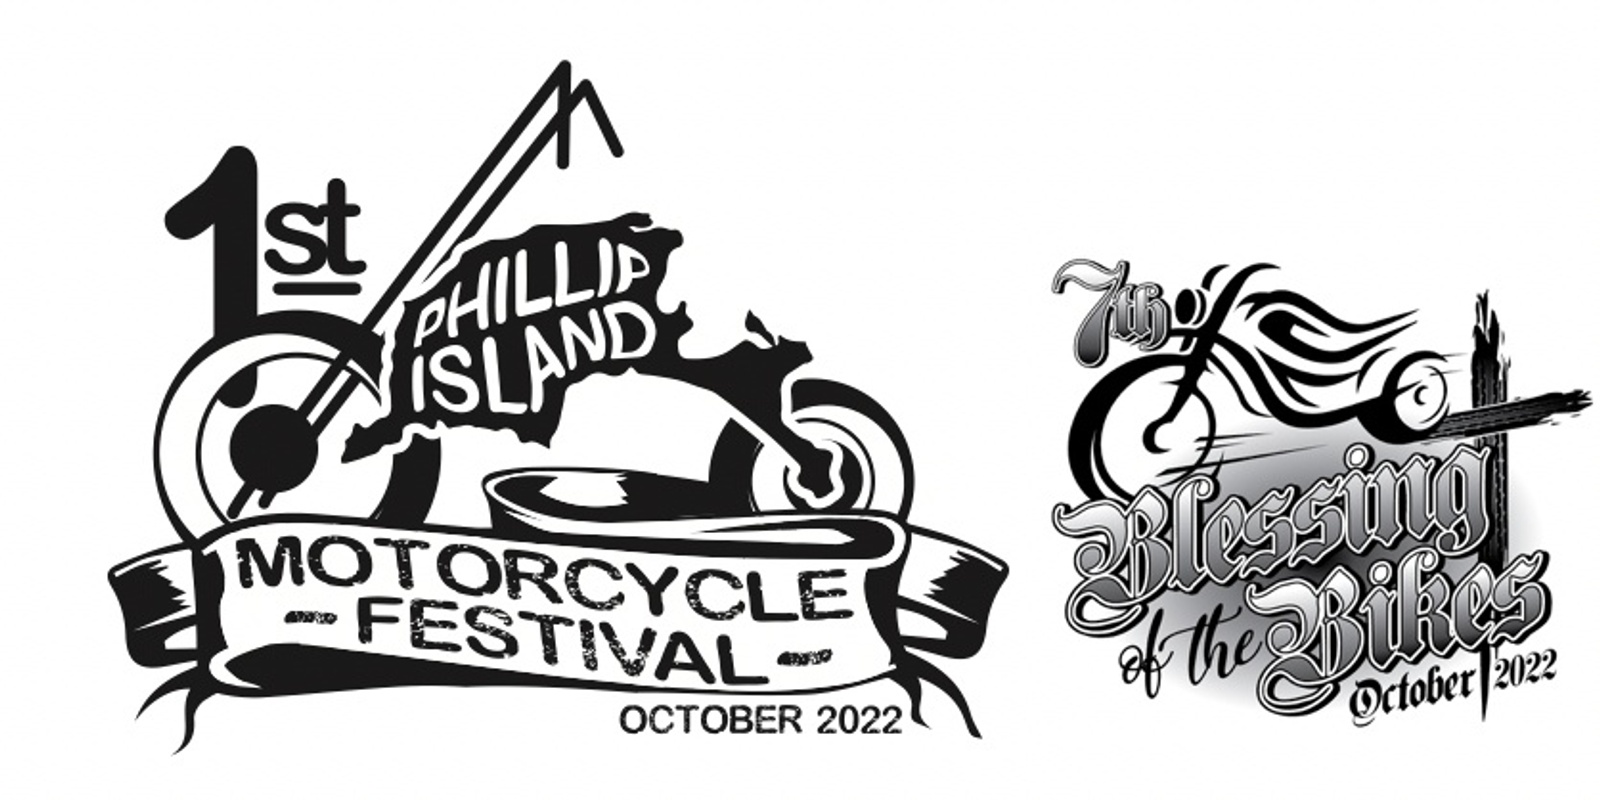 Phillip Island Motorcycle Festival Oct 2022